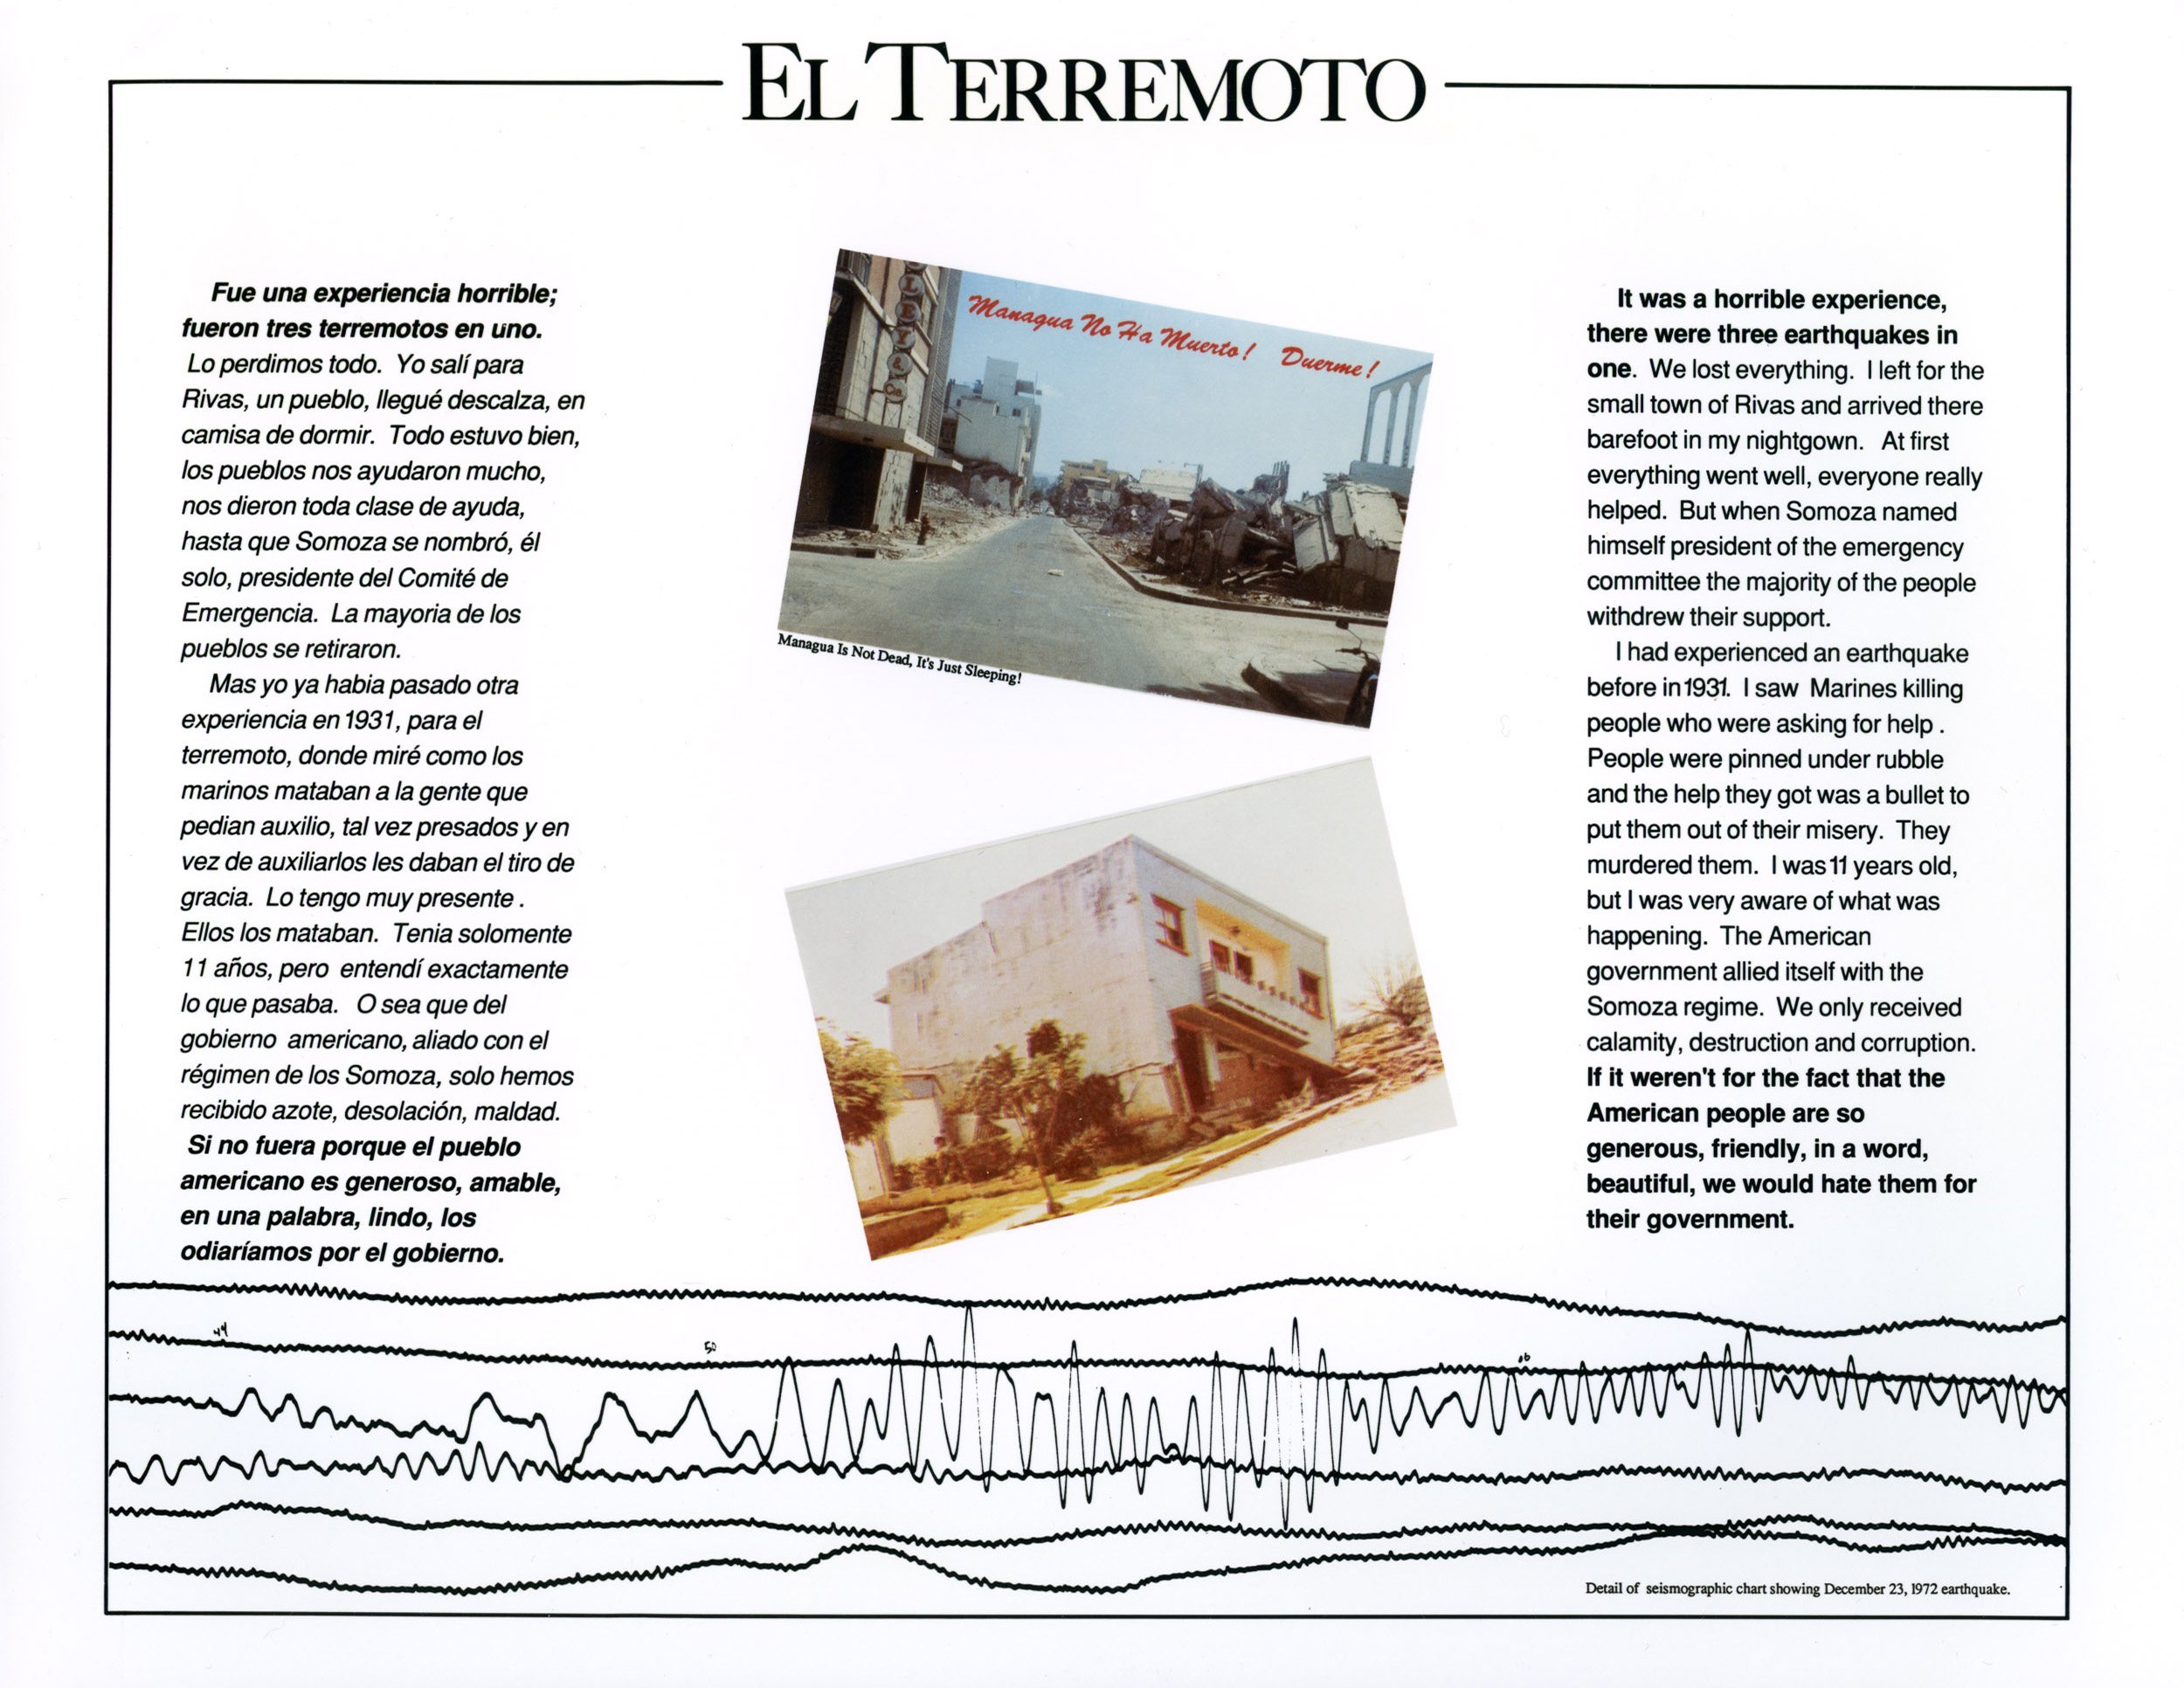 The Earthquake_El Terramoto.jpg